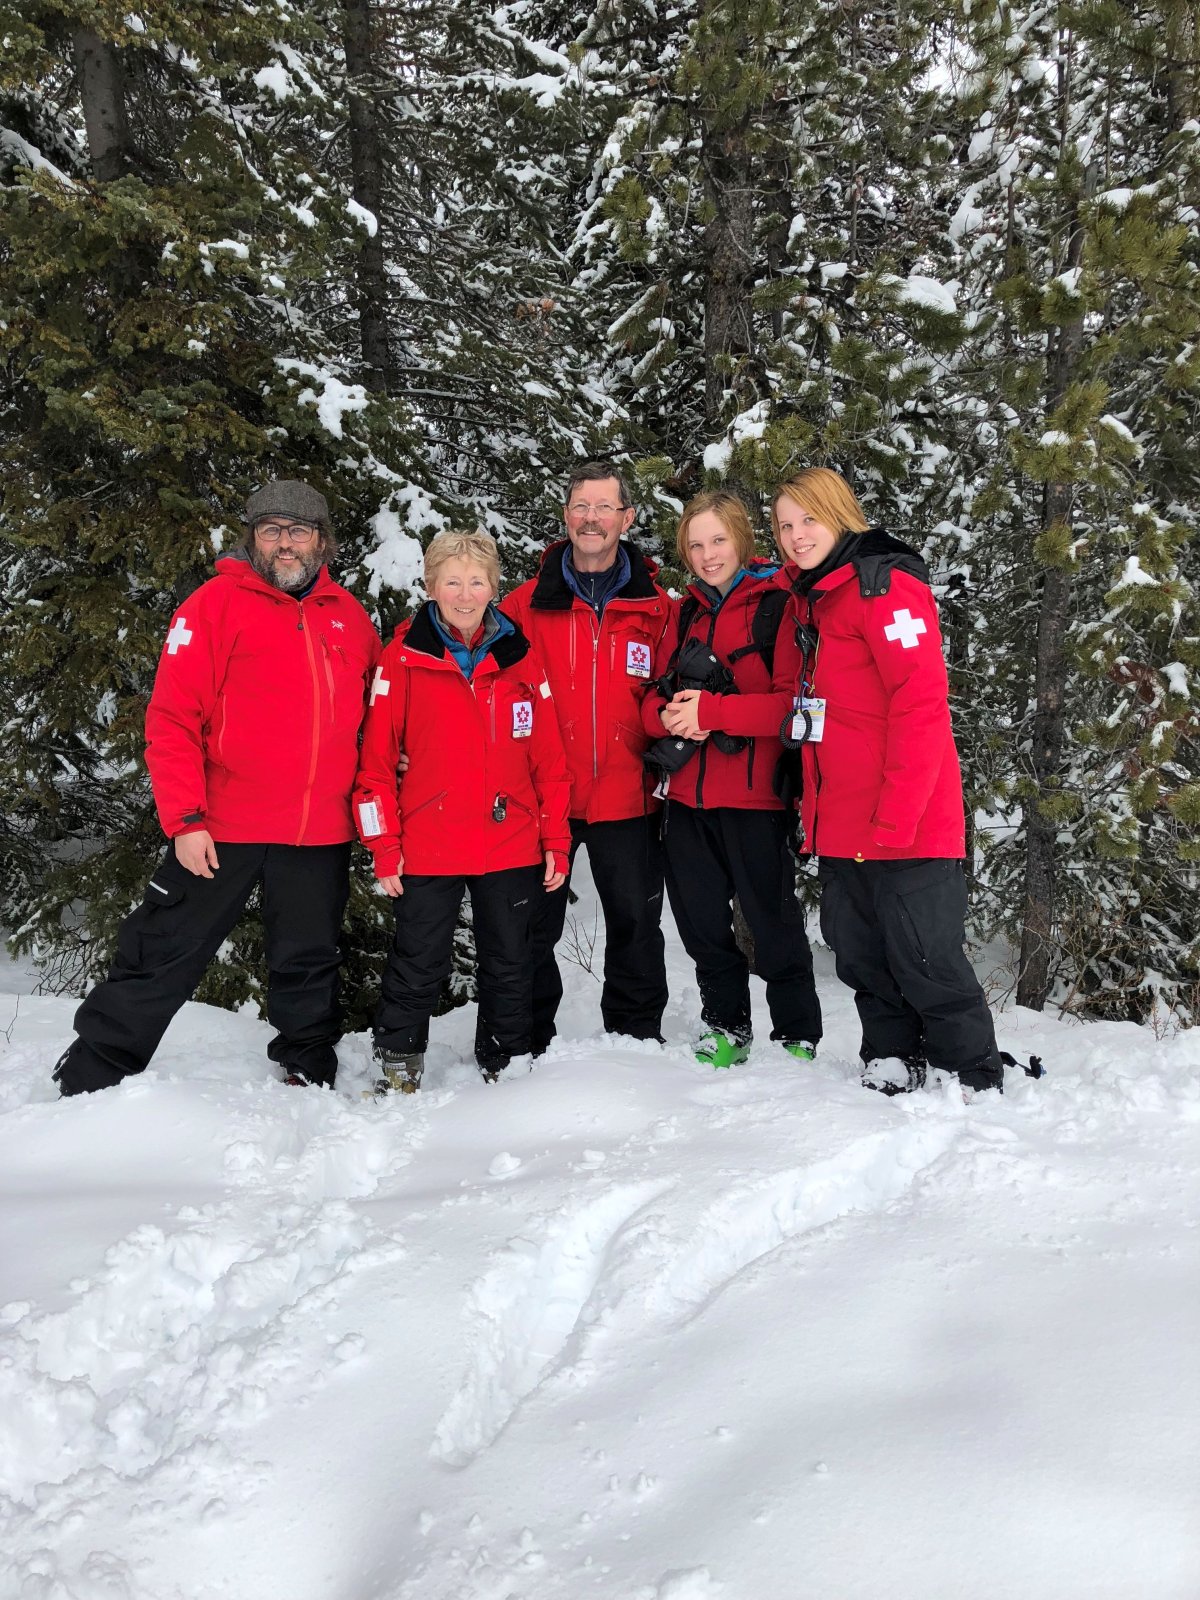 Three generations of an Edmonton family are volunteering as ski patrollers at Marmot Basin this winter.